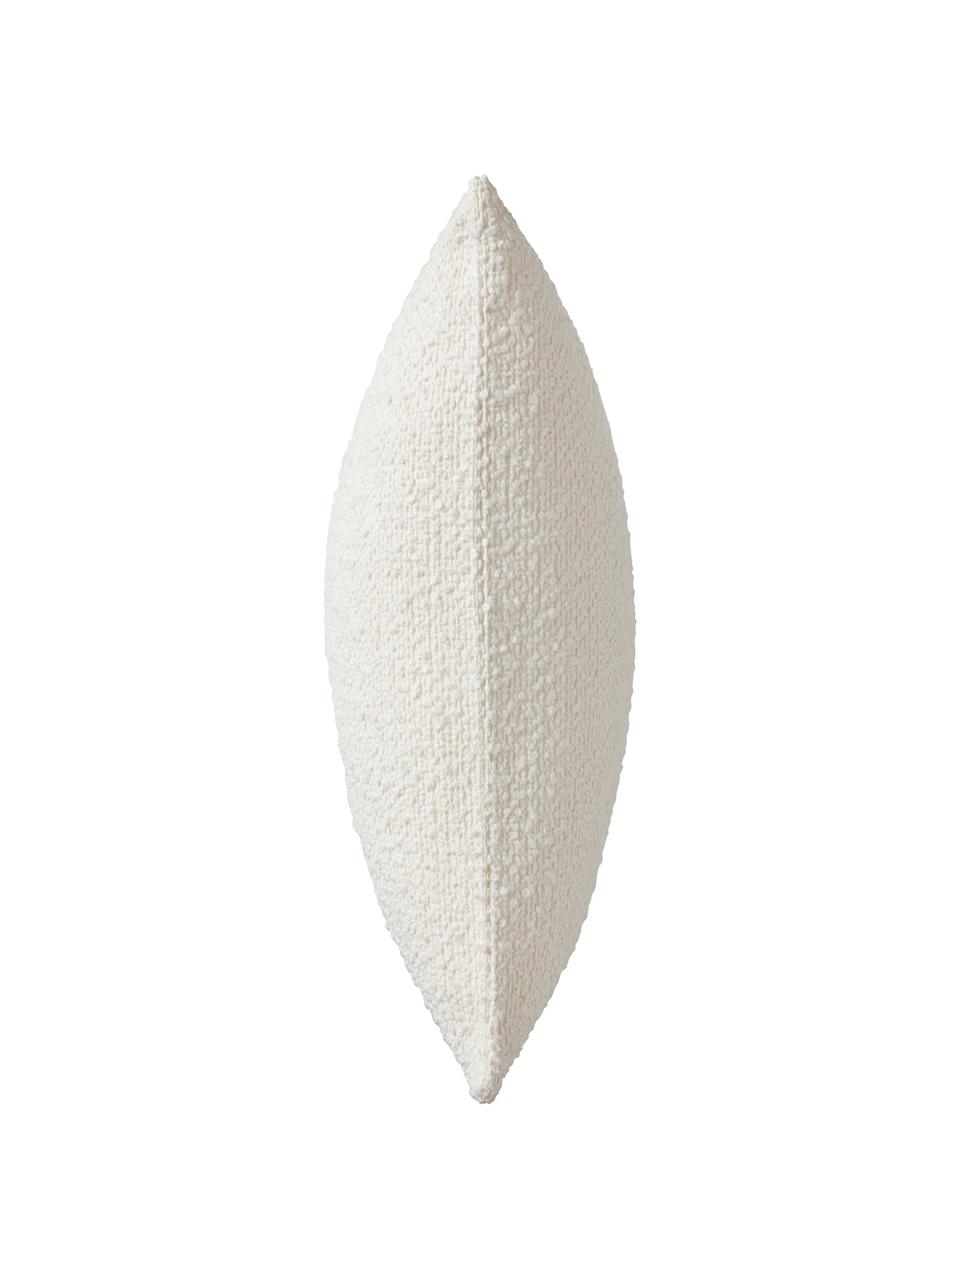 Bouclé kussenhoes Coda in wit, 97% polyester, 3% acryl, Wit, B 50 x L 50 cm